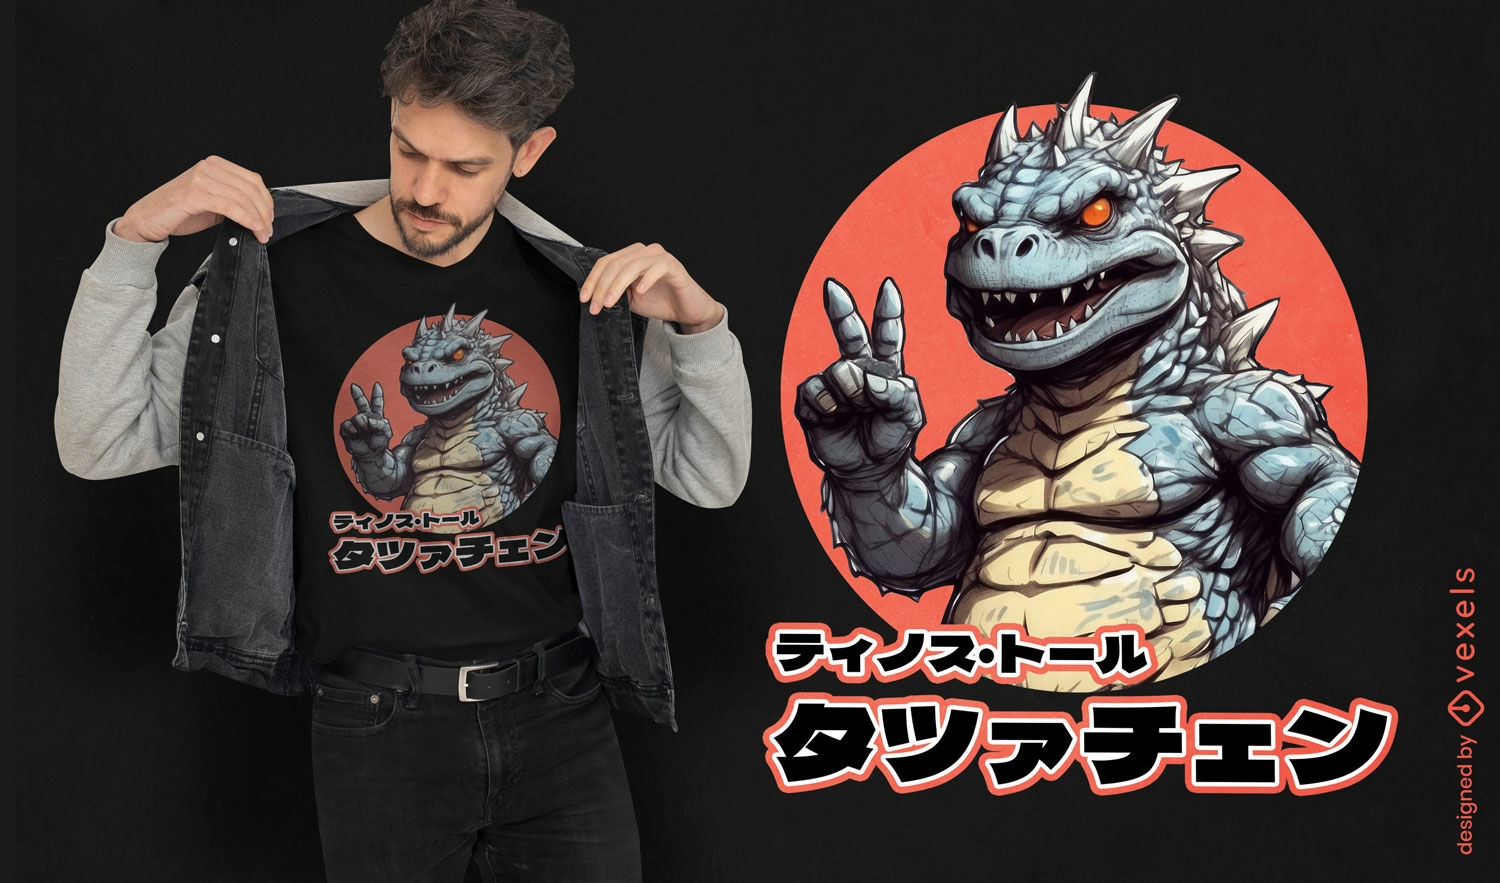 Japanese Godzilla cartoon t-shirt design